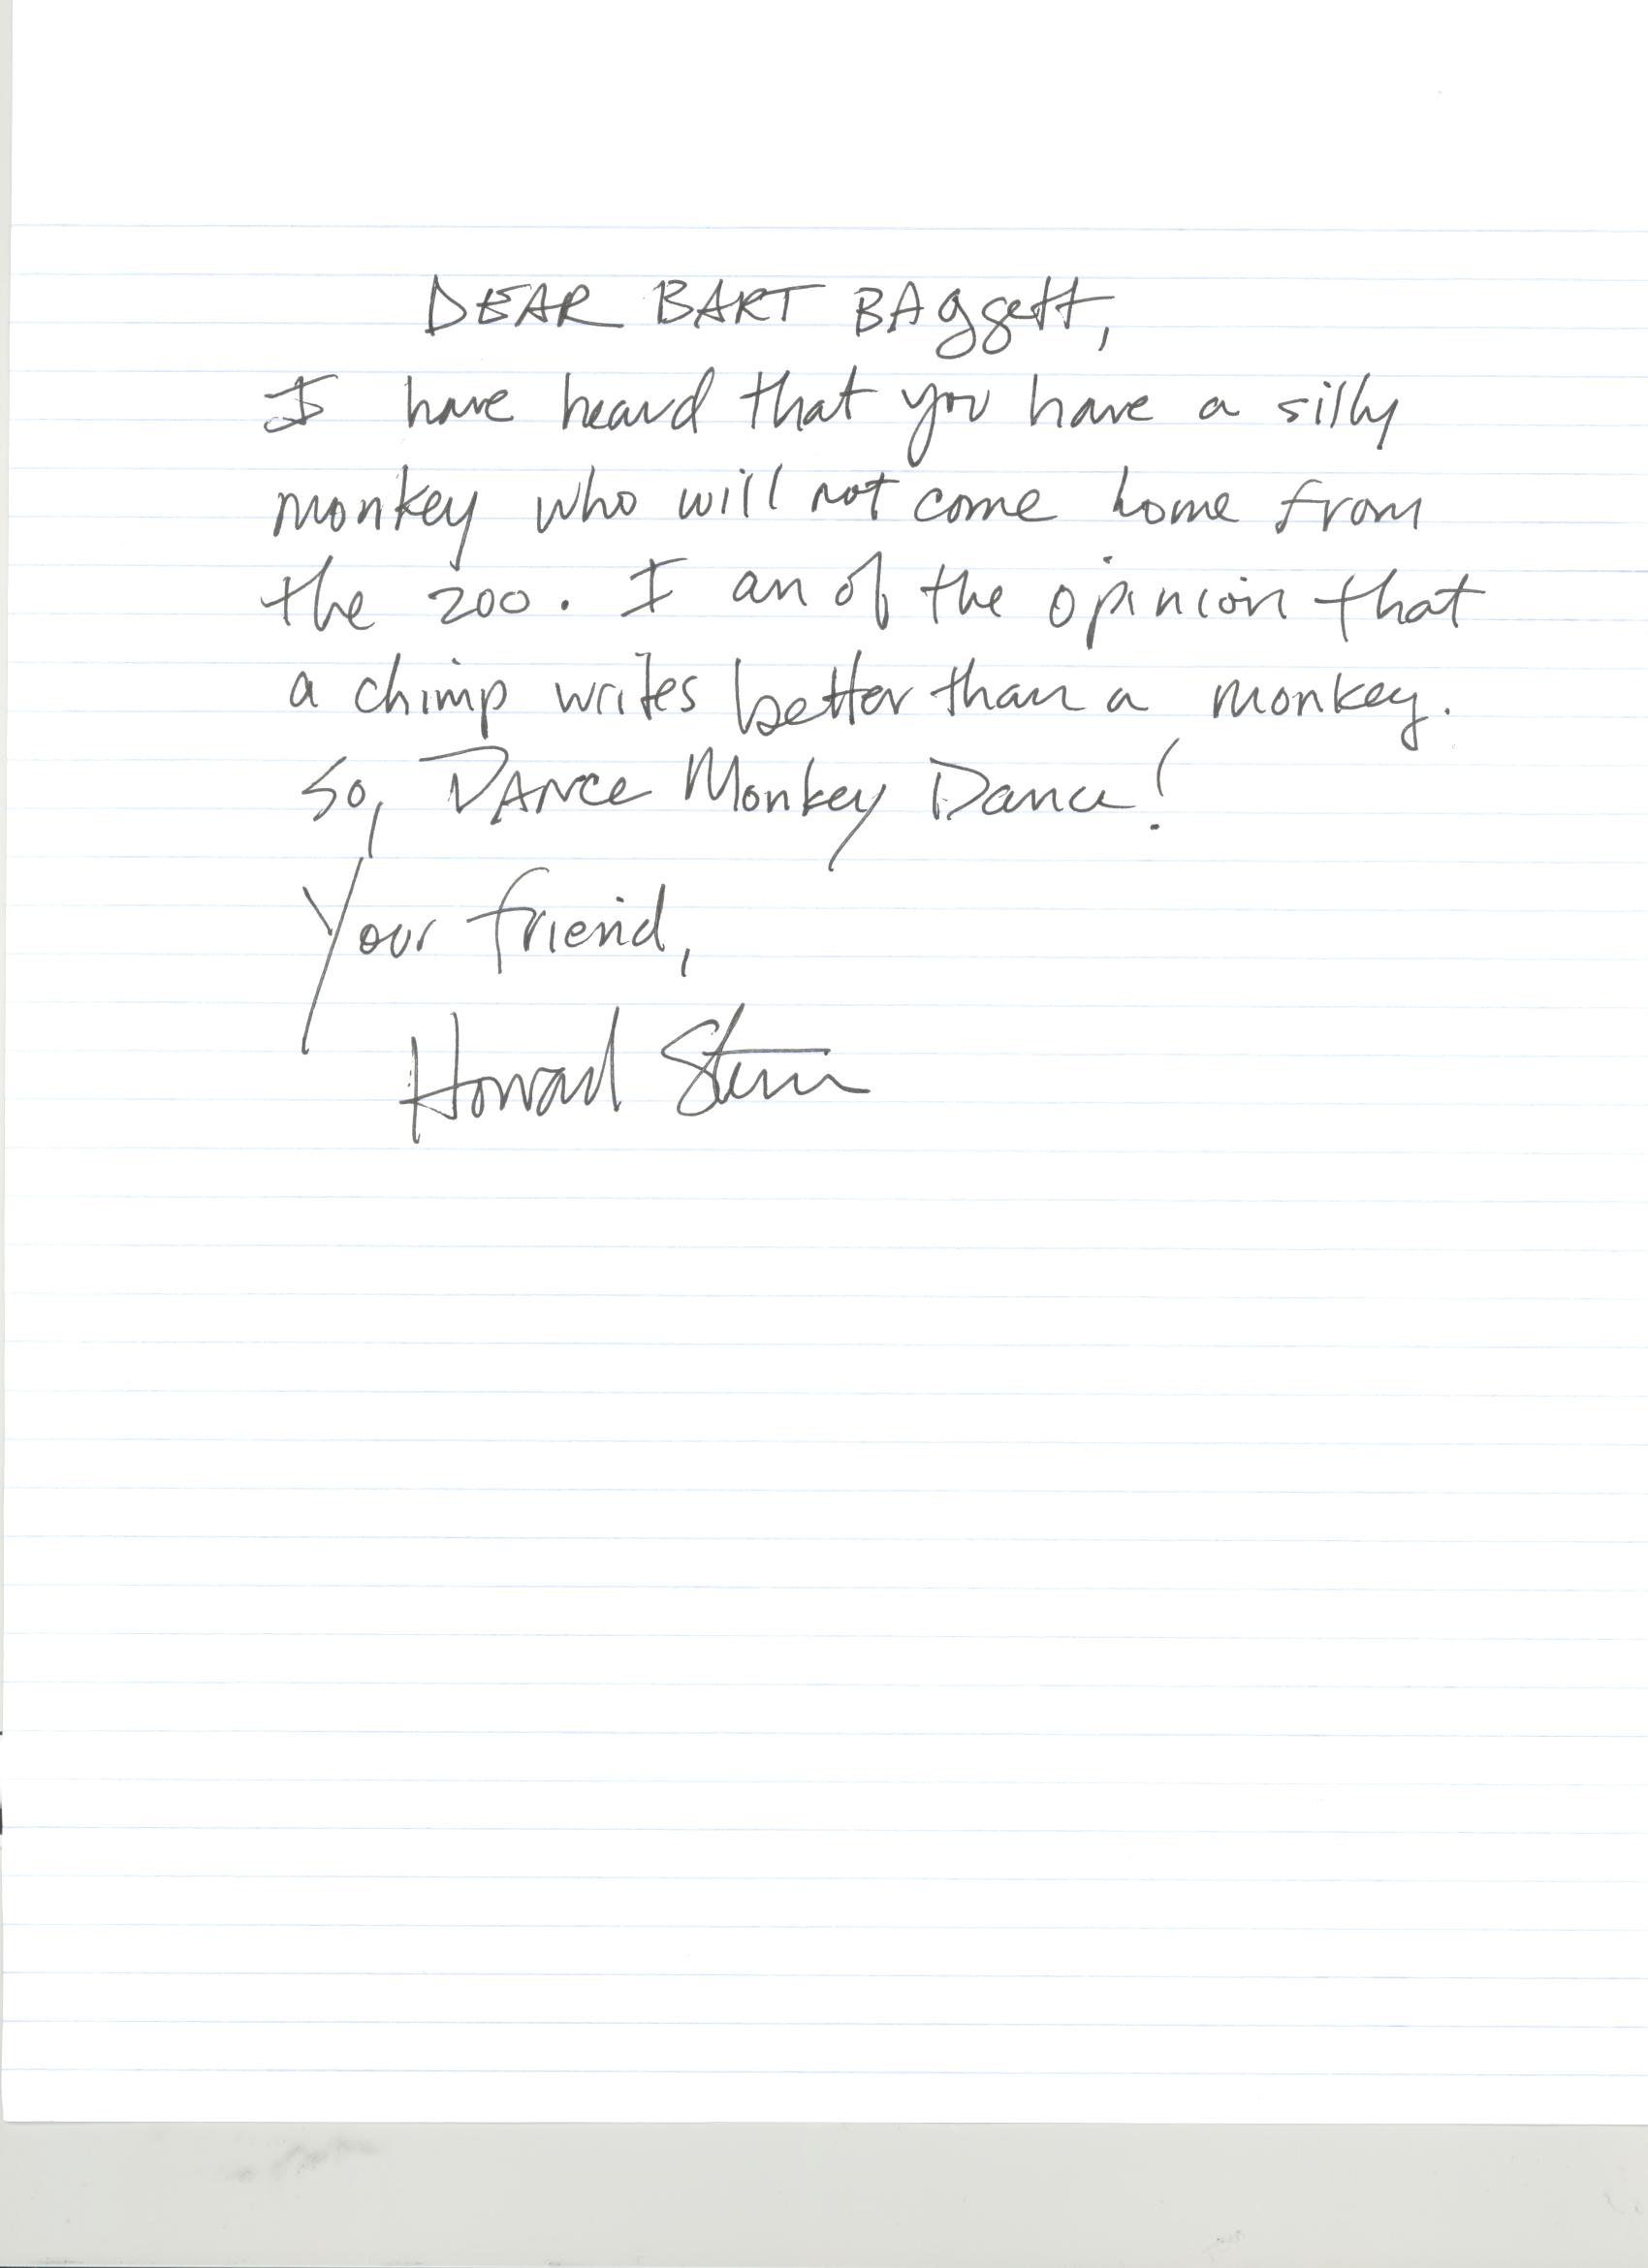 Howard Stern Signature and Handwriting sample